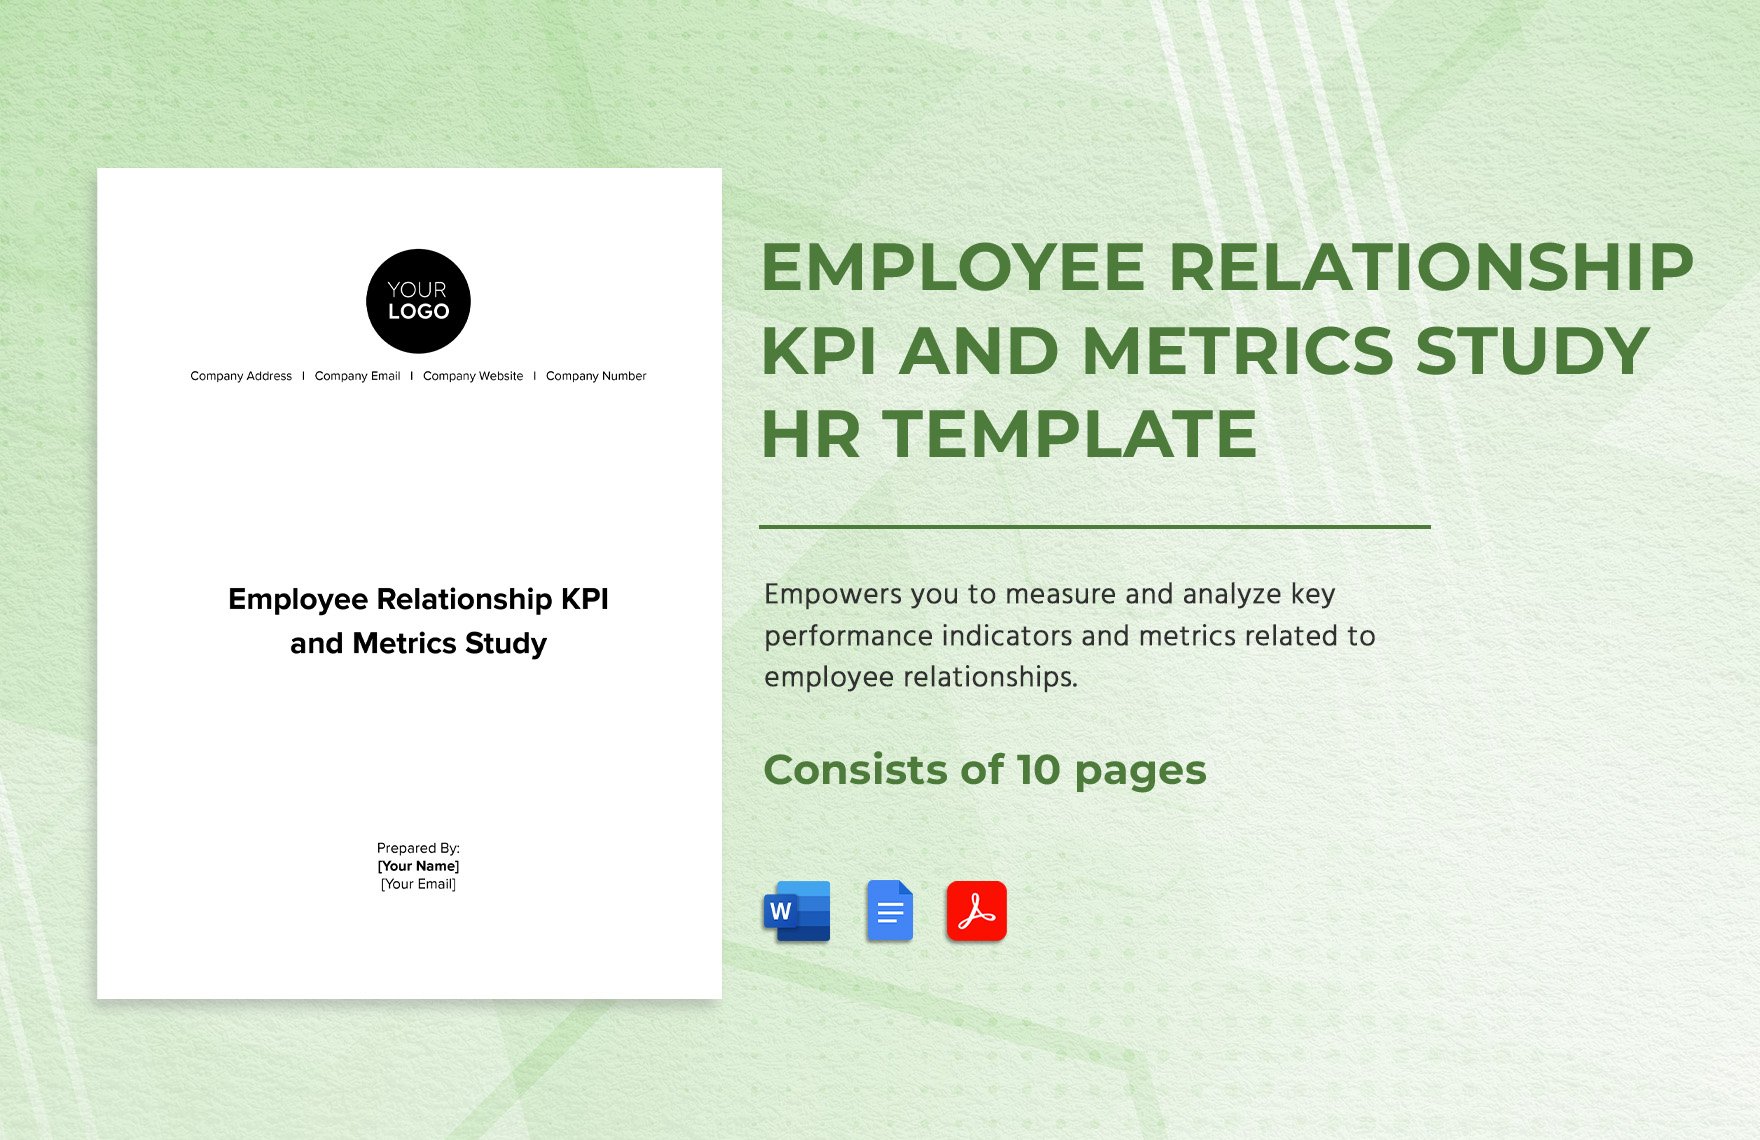 Employee Relationship KPI and Metrics Study HR Template